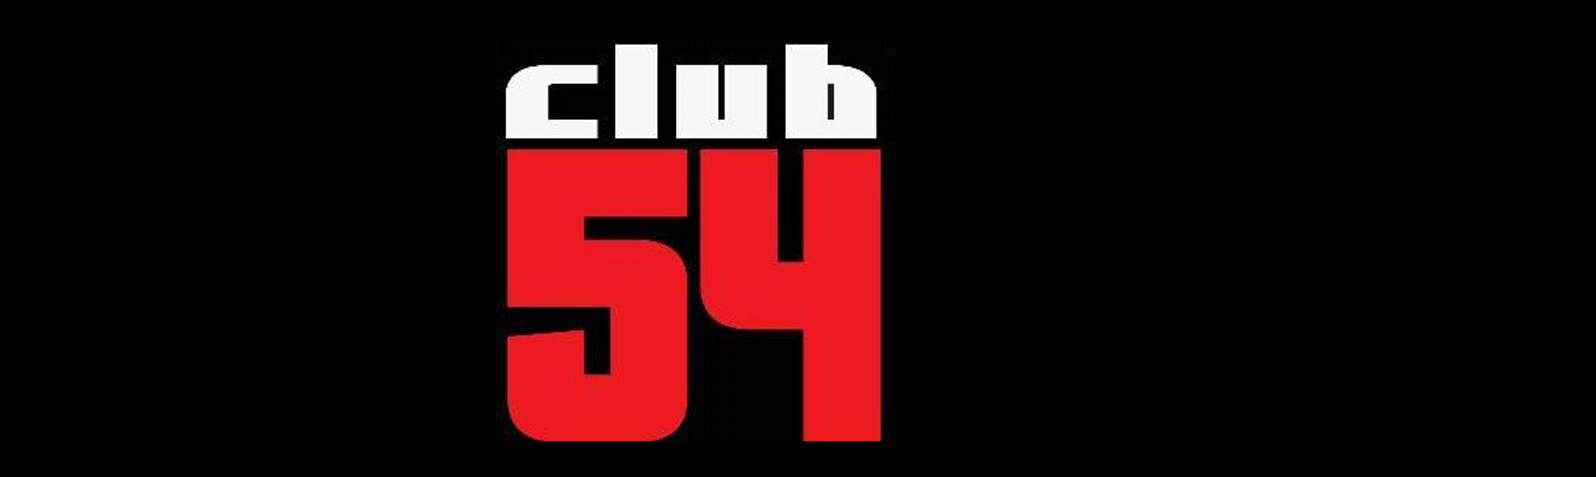 Club 54